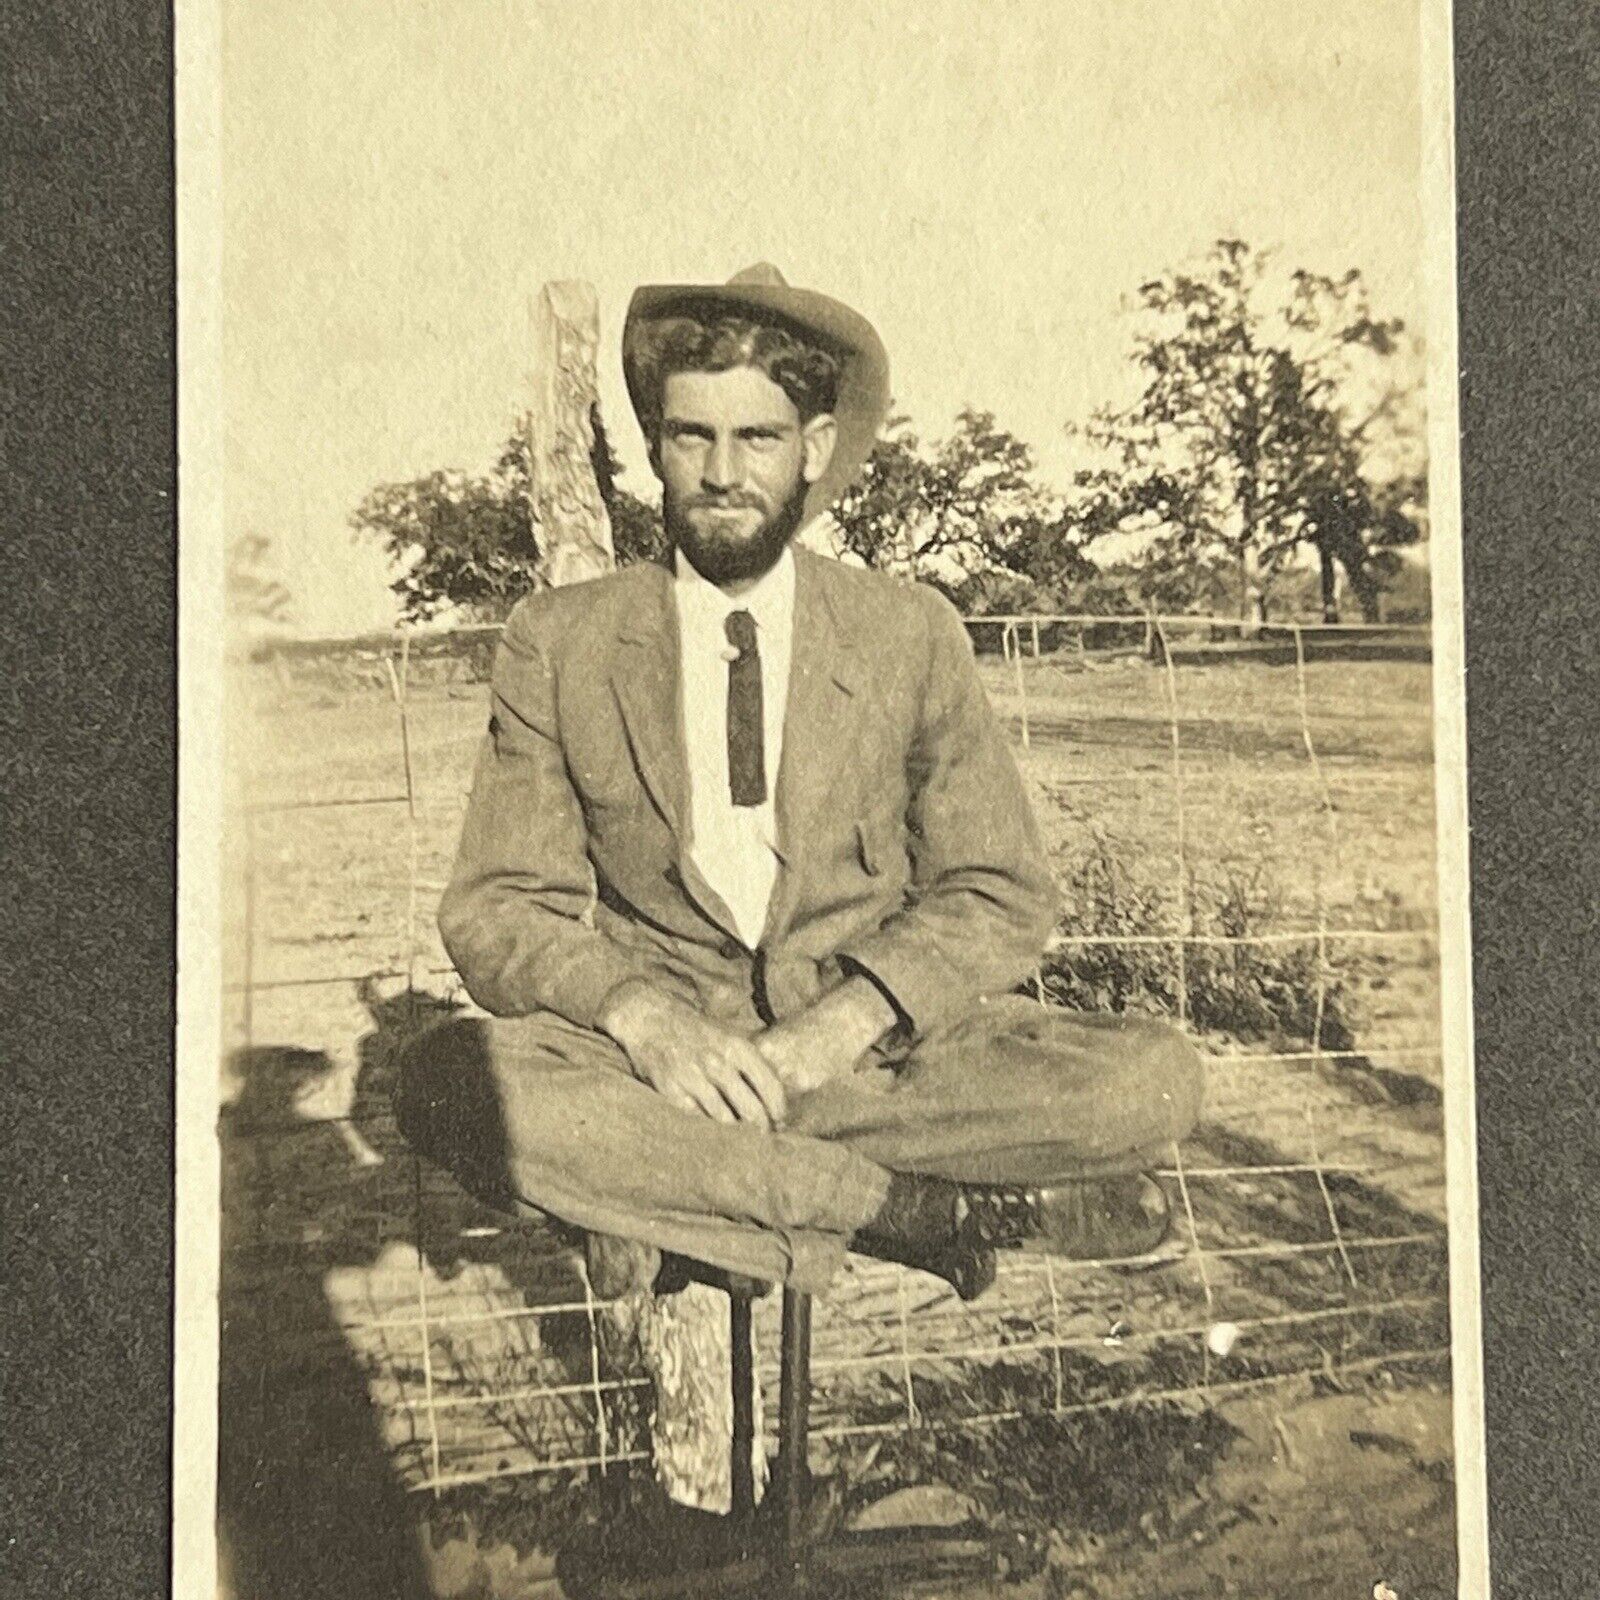 Antique Cabinet Card Photograph Floating Man Trick Photo Magic Handsome Cowboy